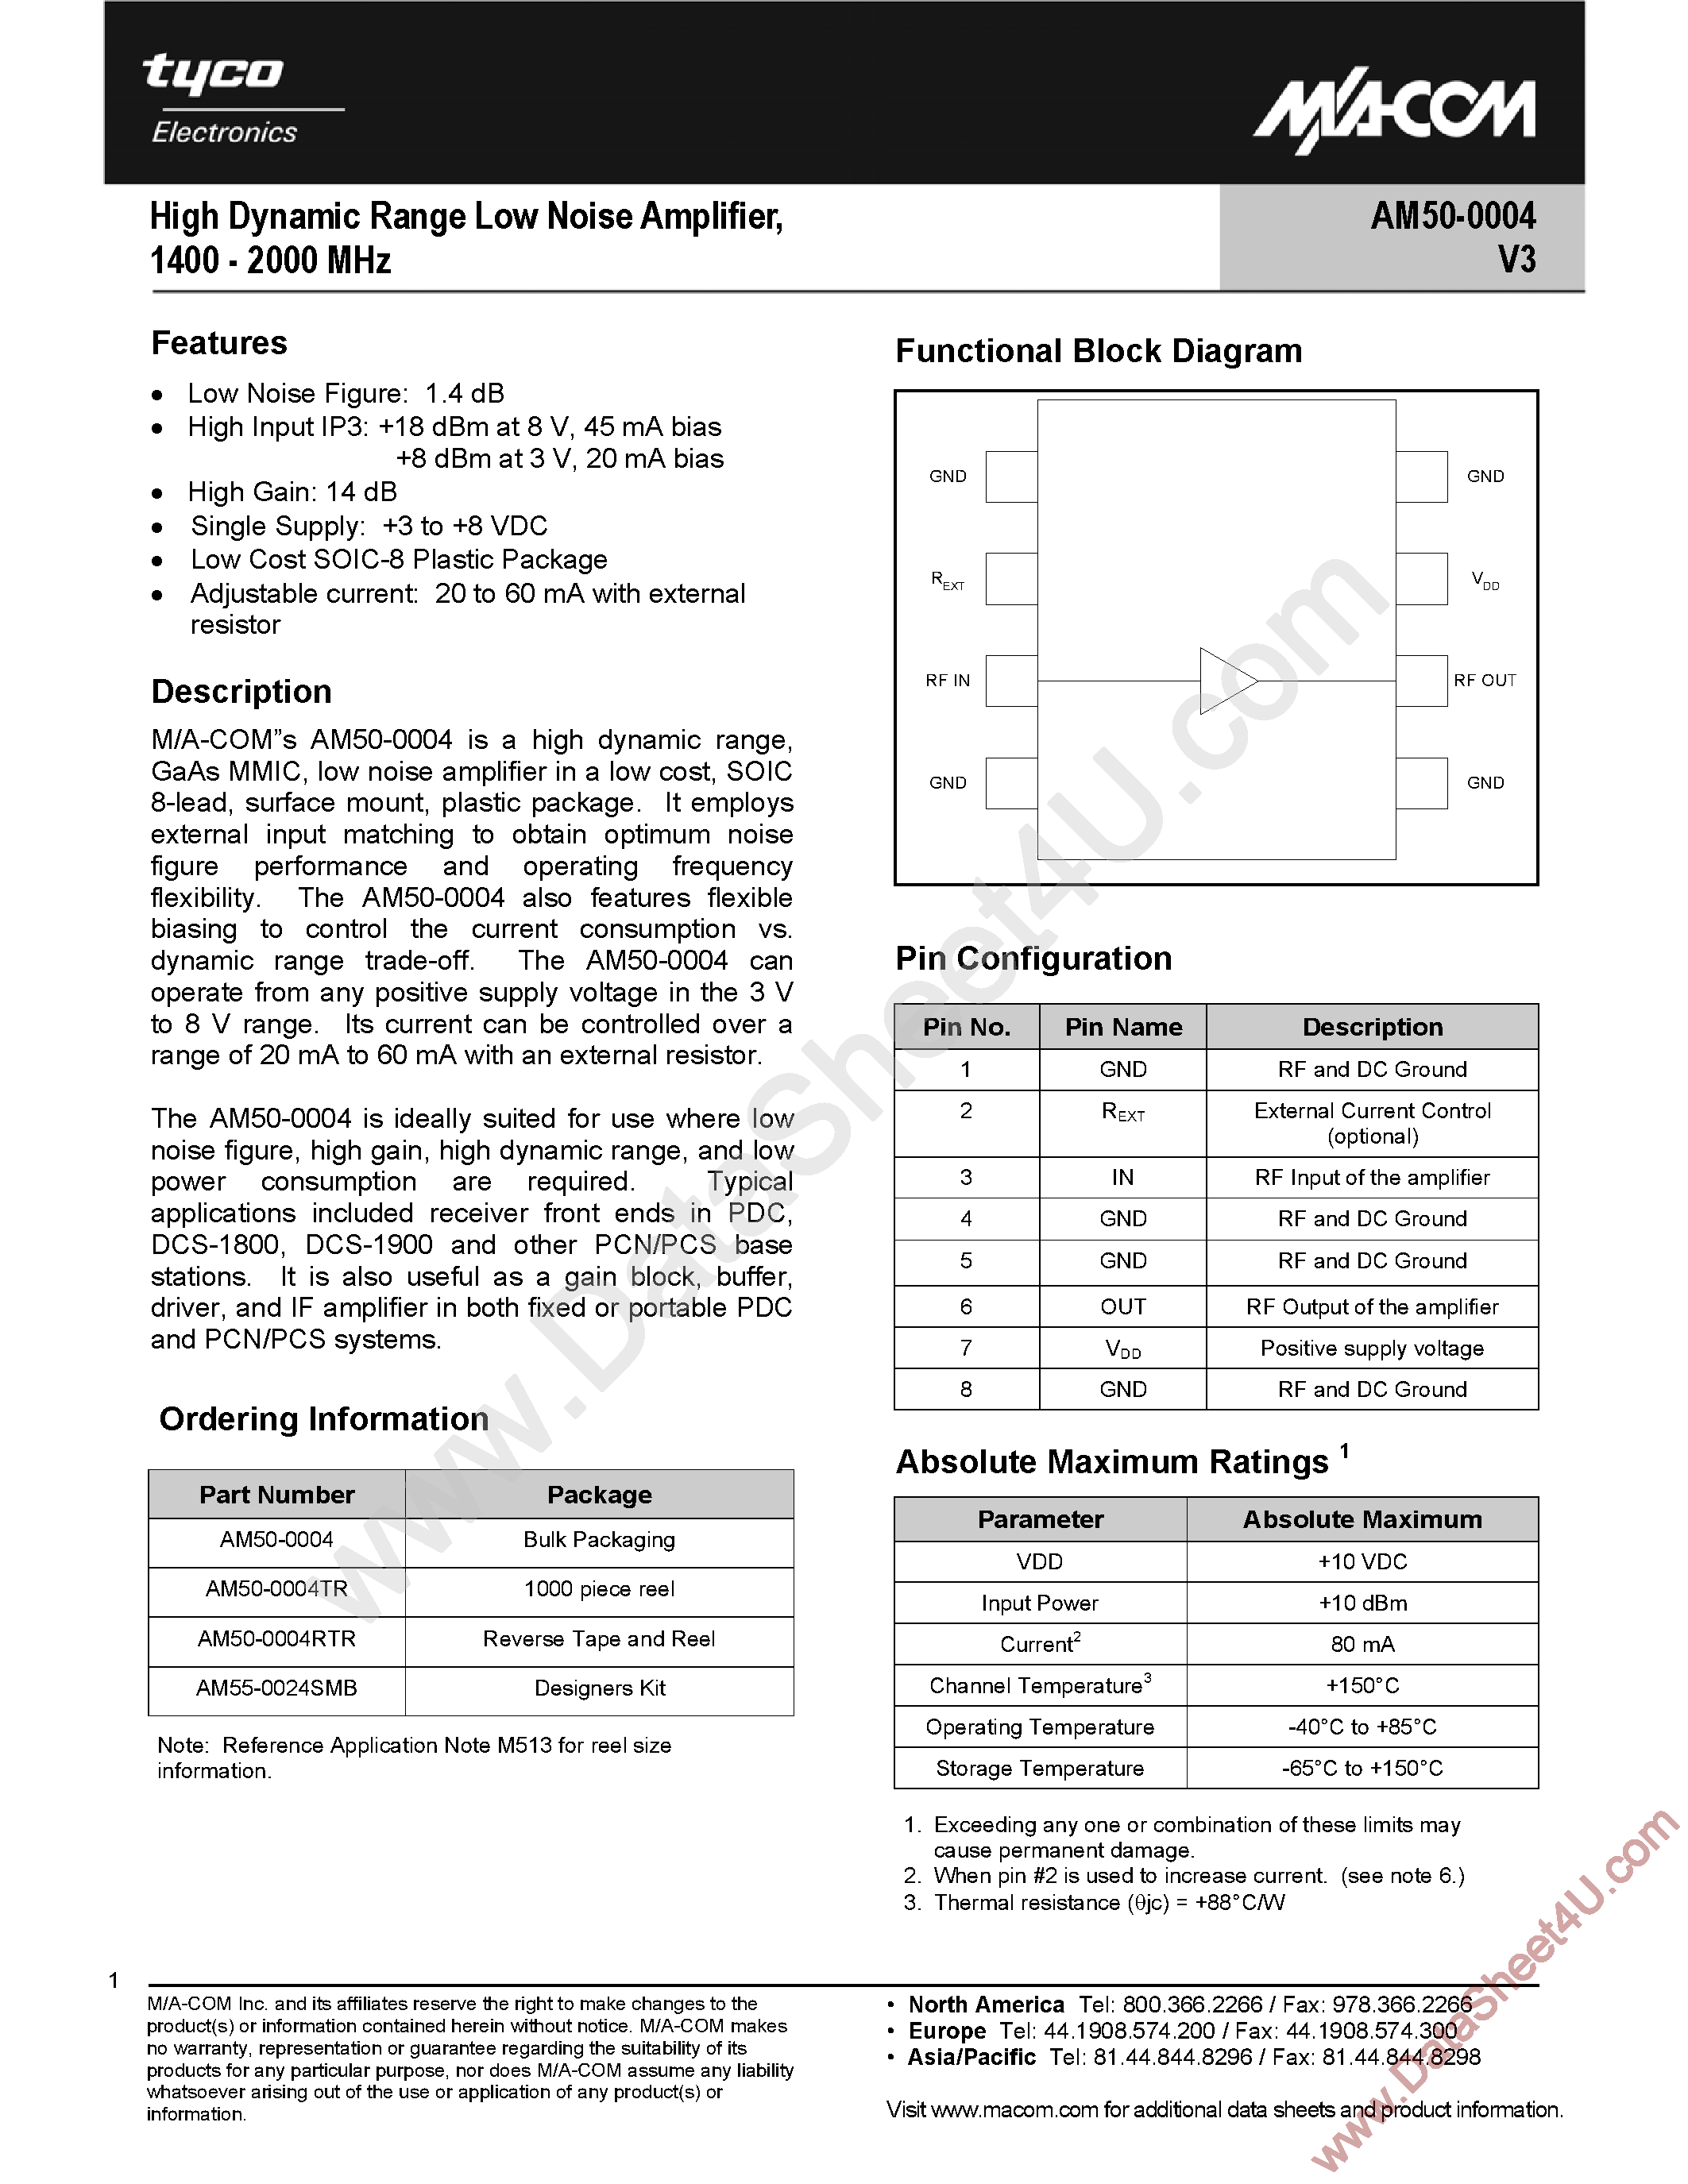 Datasheet AM50-0004V3 - High Dynamic Range Low Noise Amplifier page 1